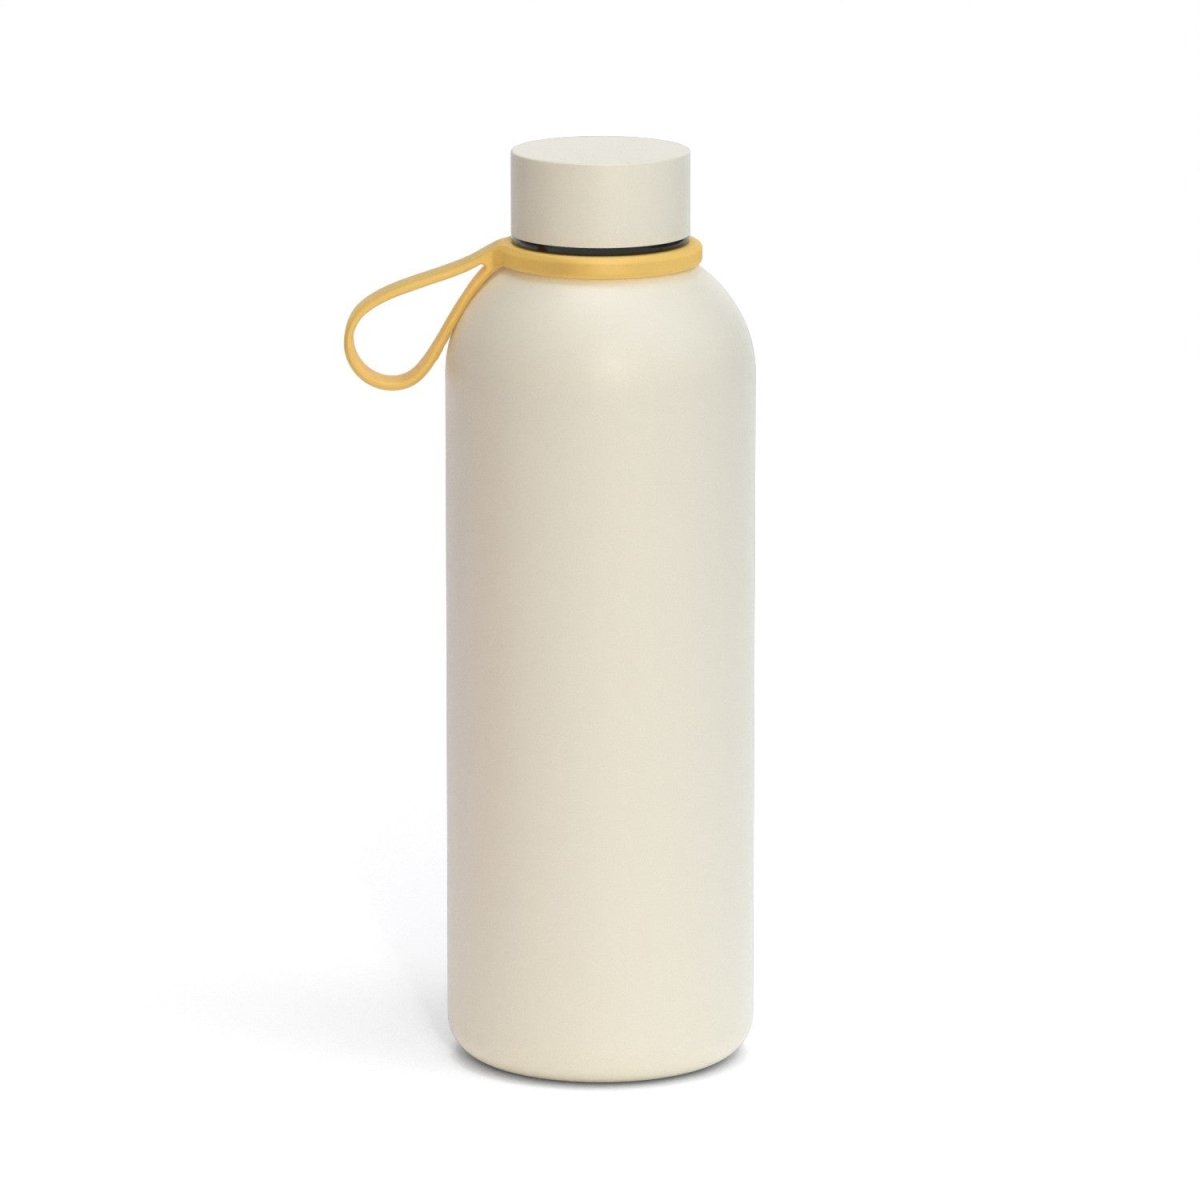 EKOBO Insulated Reusable Bottle, 16 oz - Ivory - lily & onyx